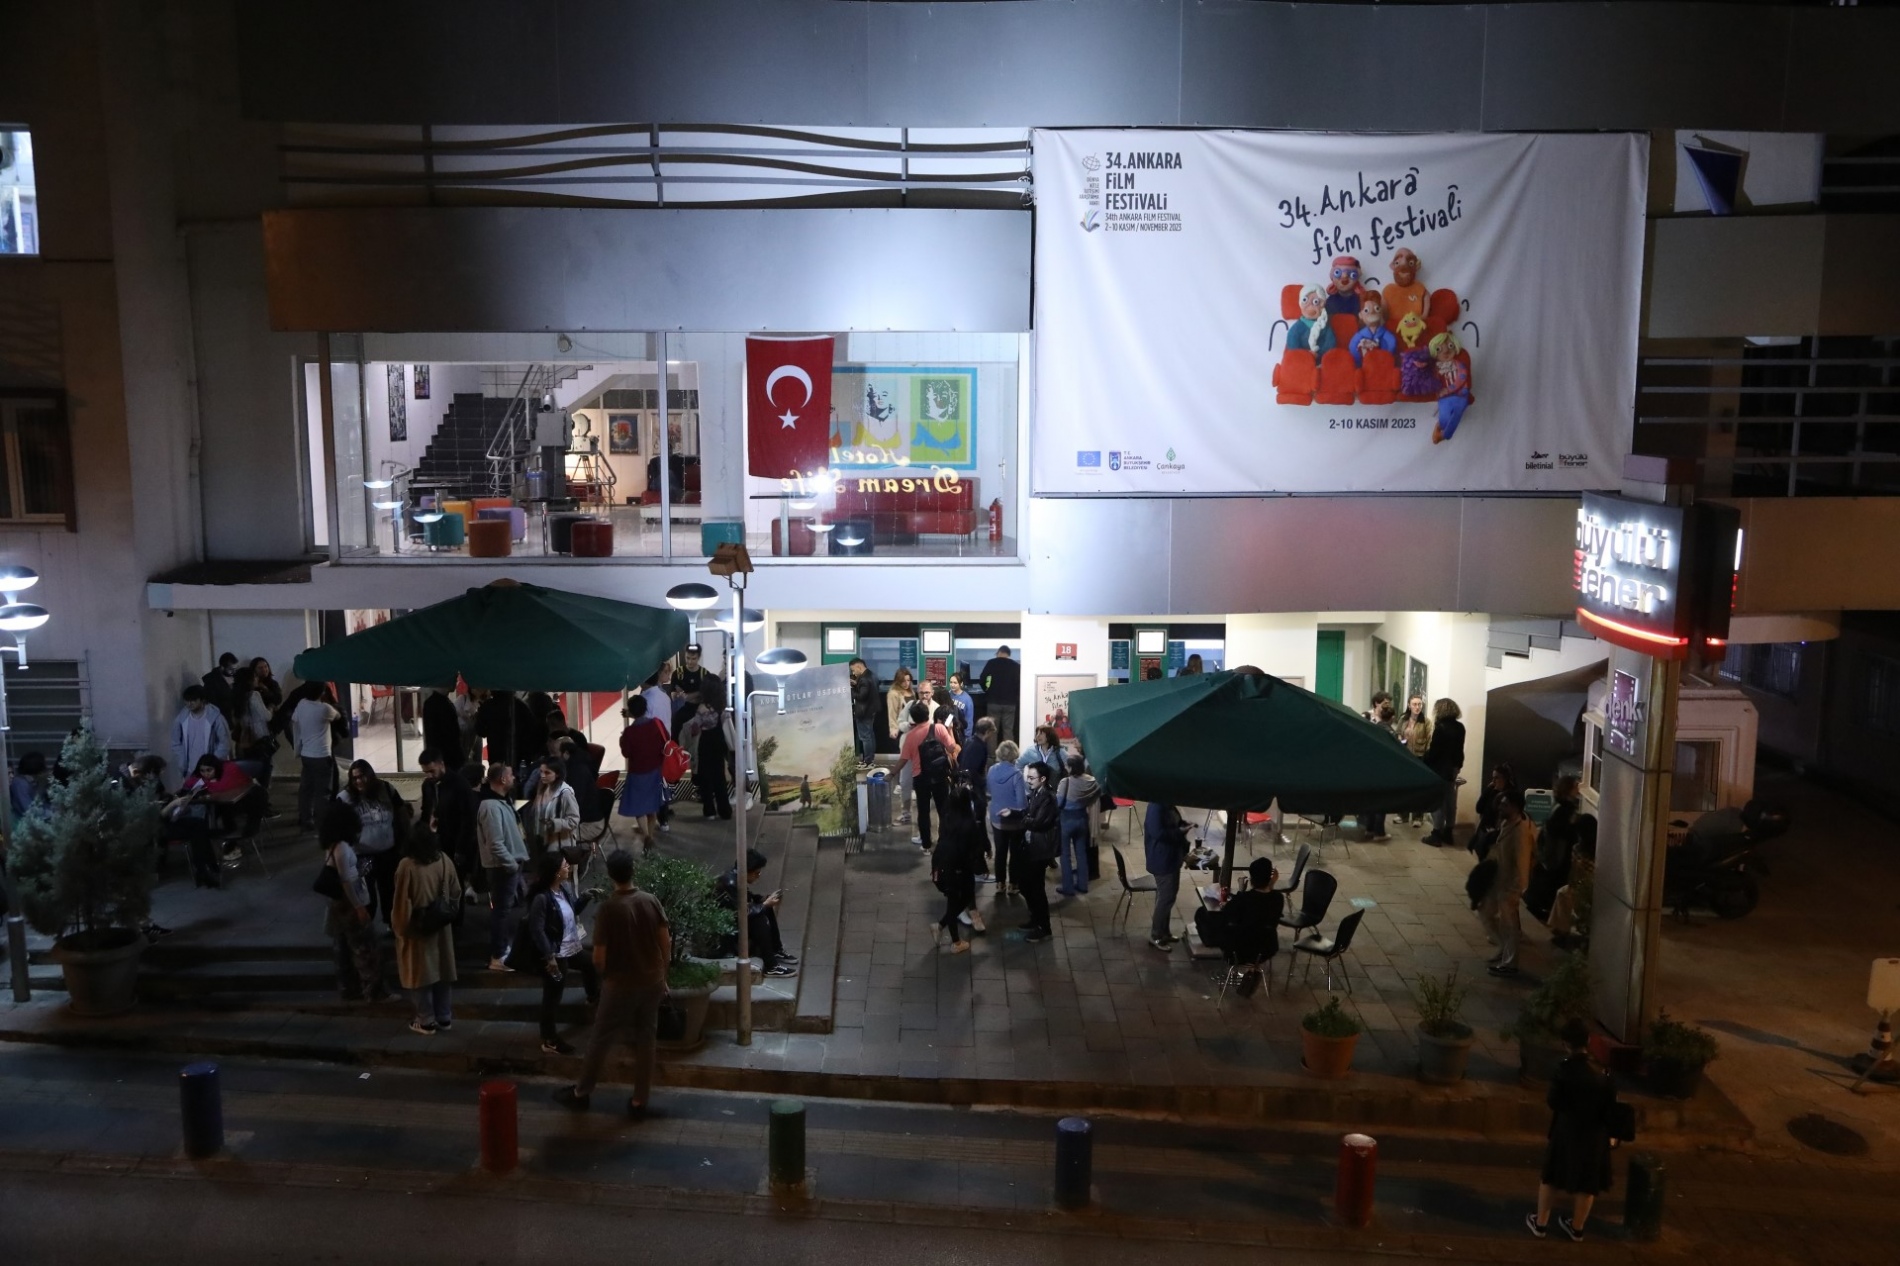 34. Ankara Film Festivali Üçüncü Günü Geride Bıraktı!